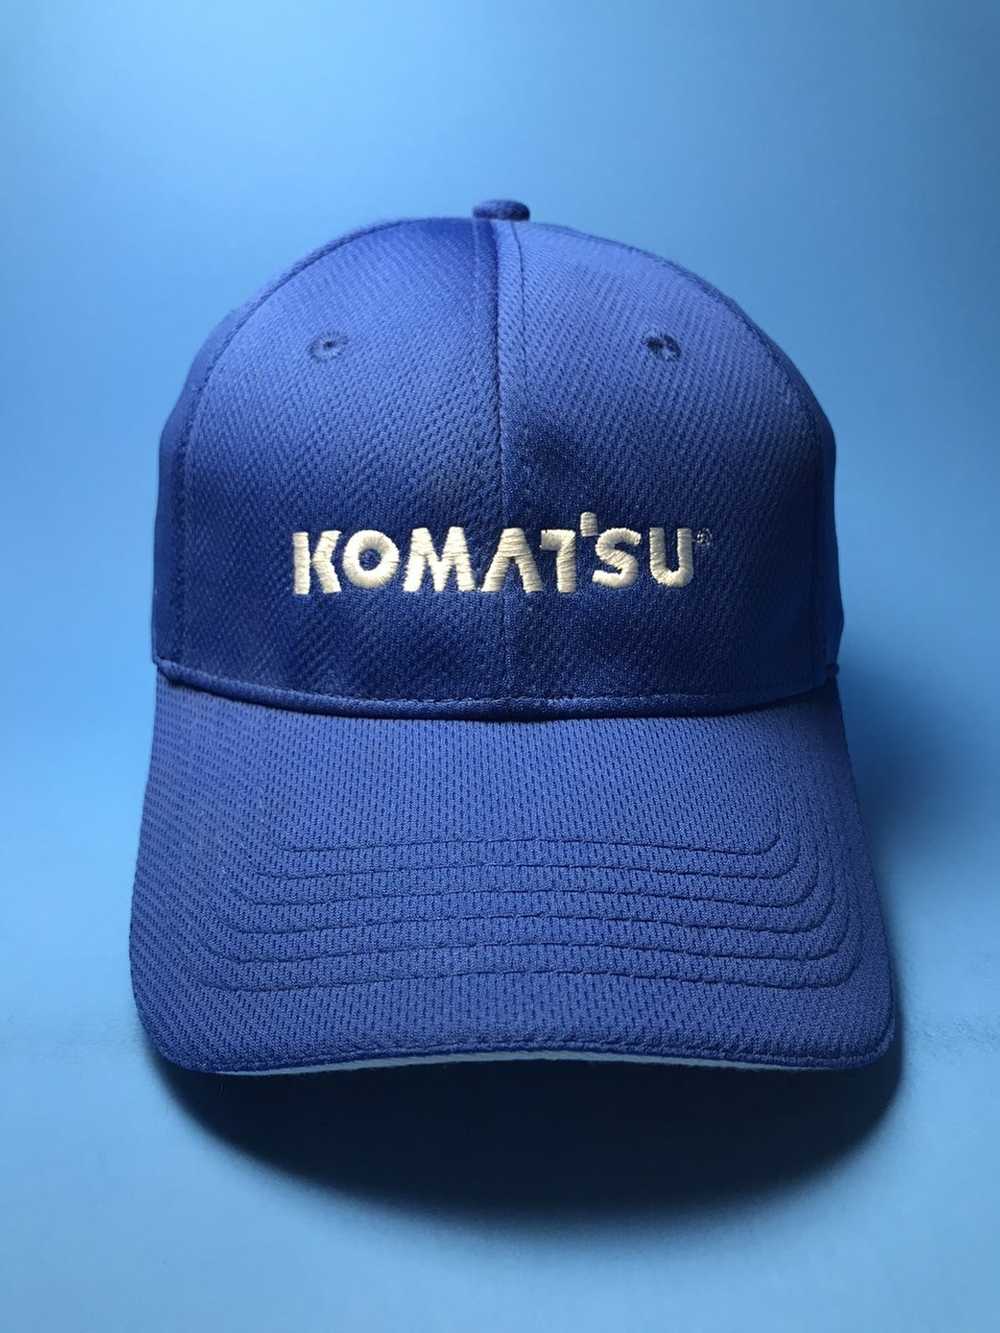 Vintage Vintage Komatsu Hat - image 1